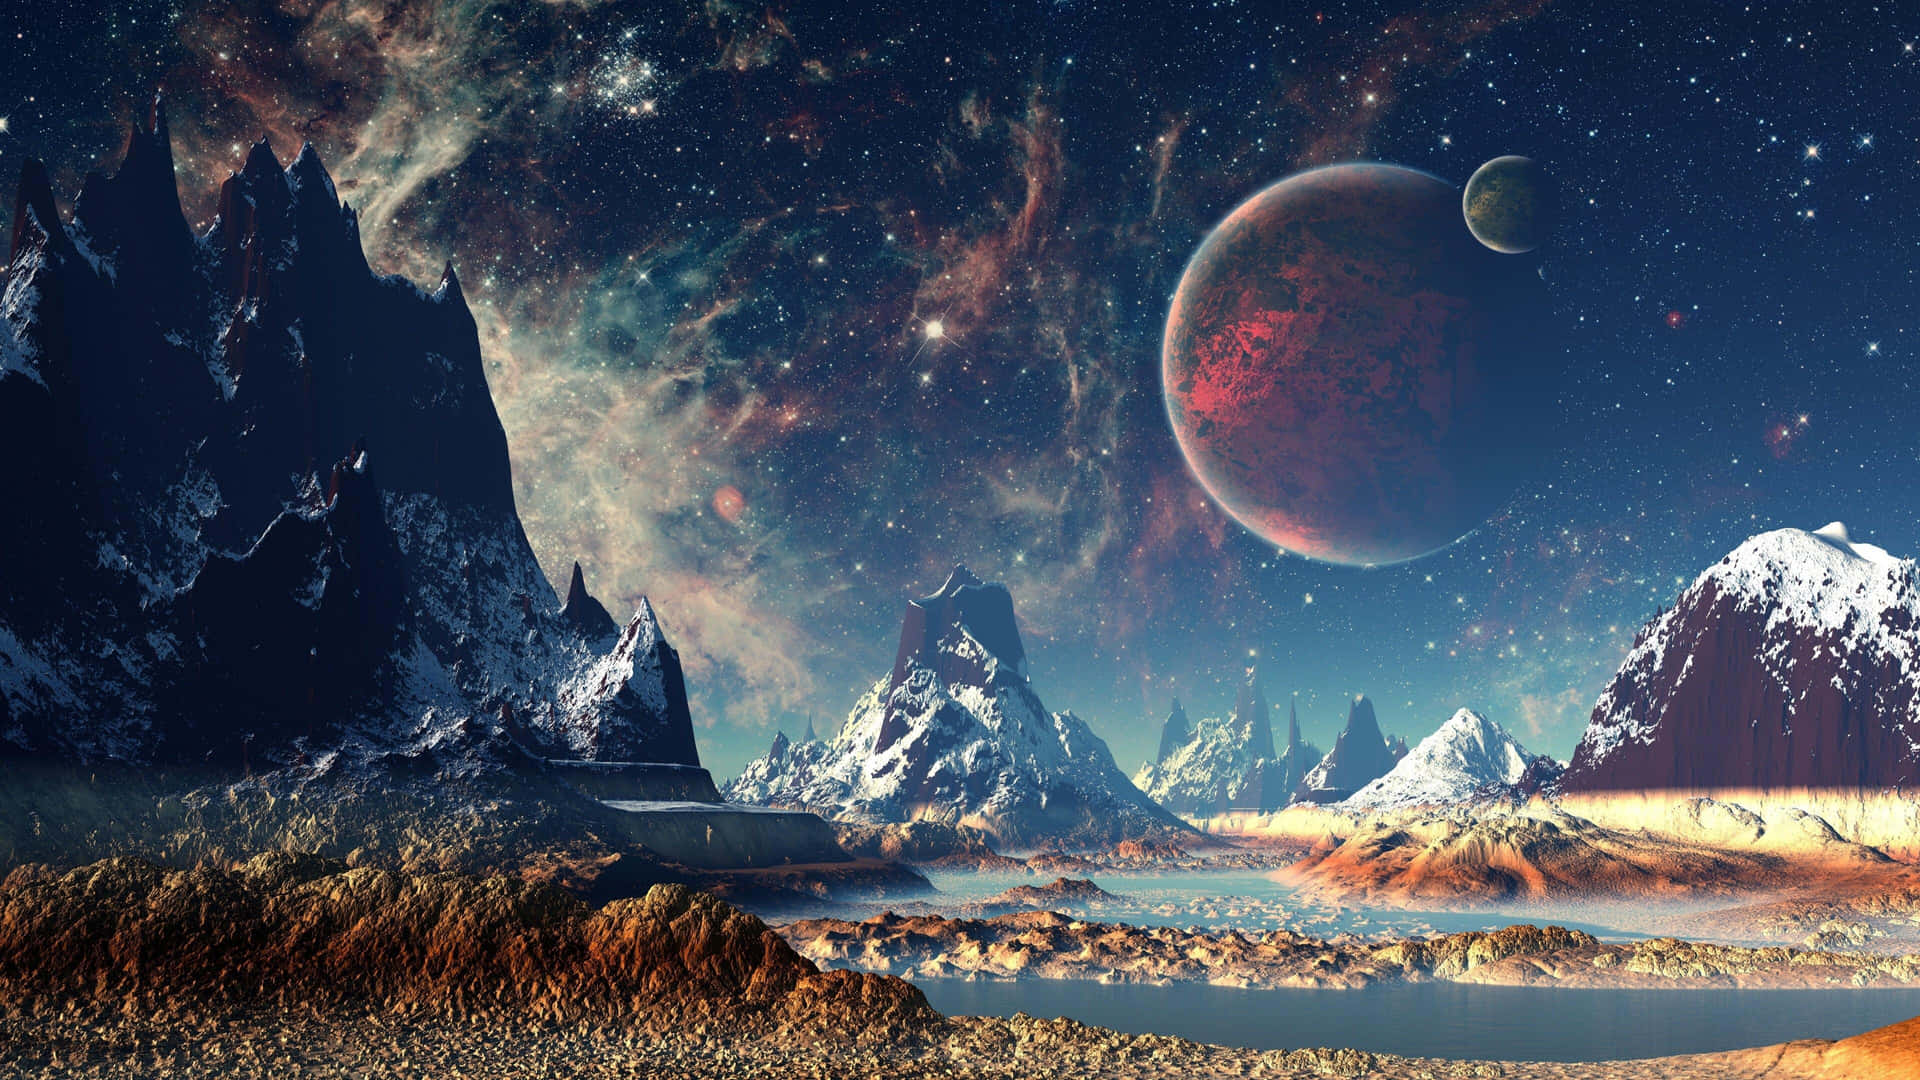 Take an Astronomical Adventure Through a Surreal Fantasy Space Wallpaper